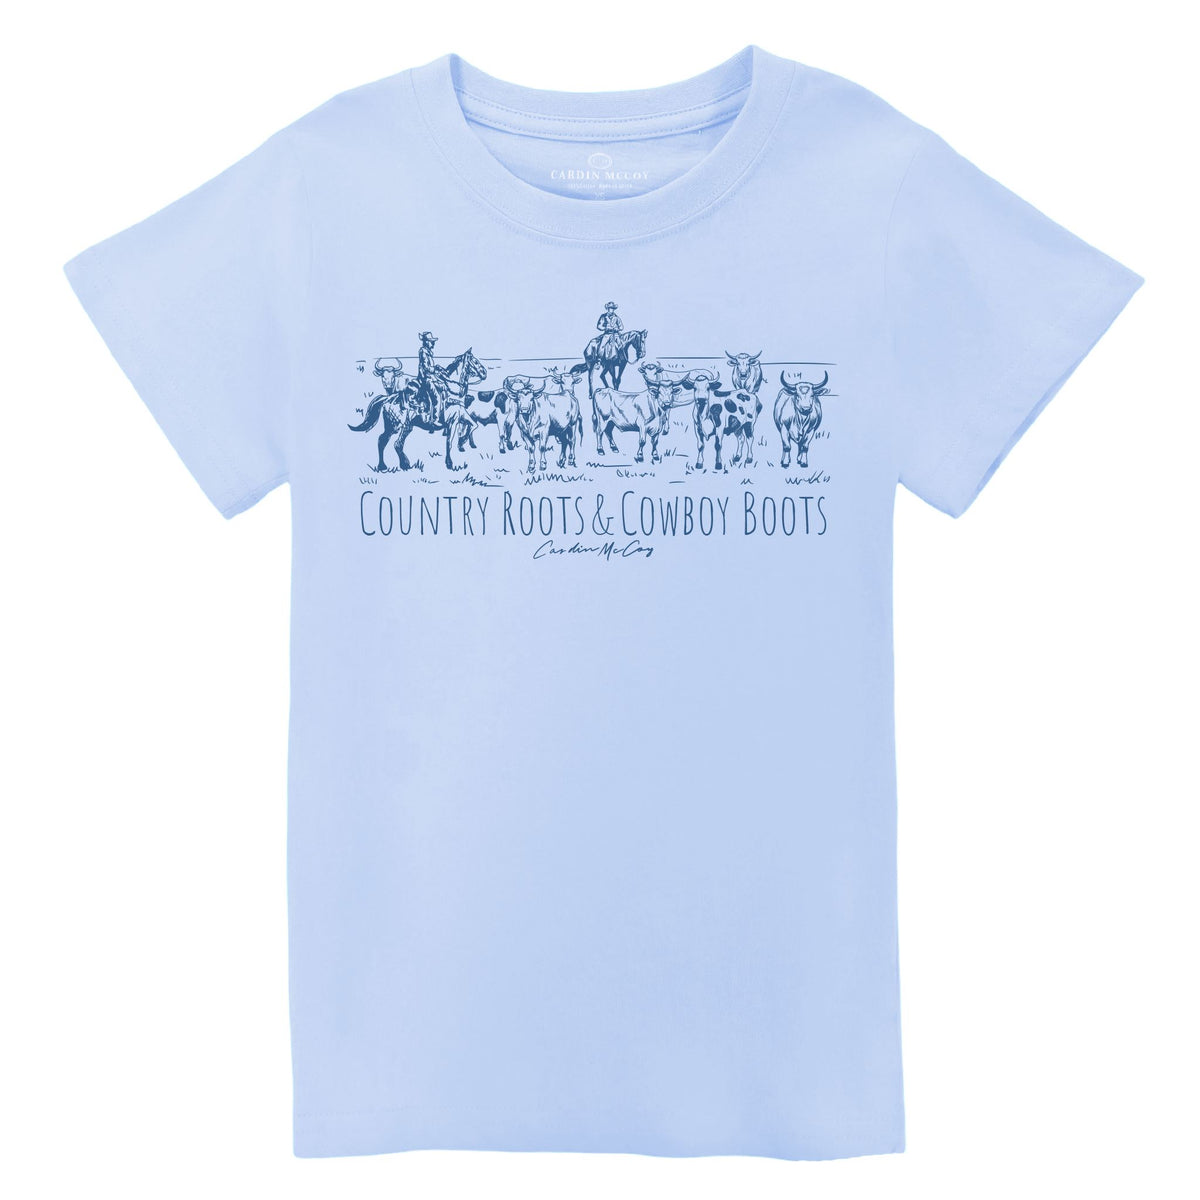 Kids' Country Roots & Cowboy Boots Front Short Sleeve Tee Short Sleeve T-Shirt Cardin McCoy Light Blue XXS (2/3) 